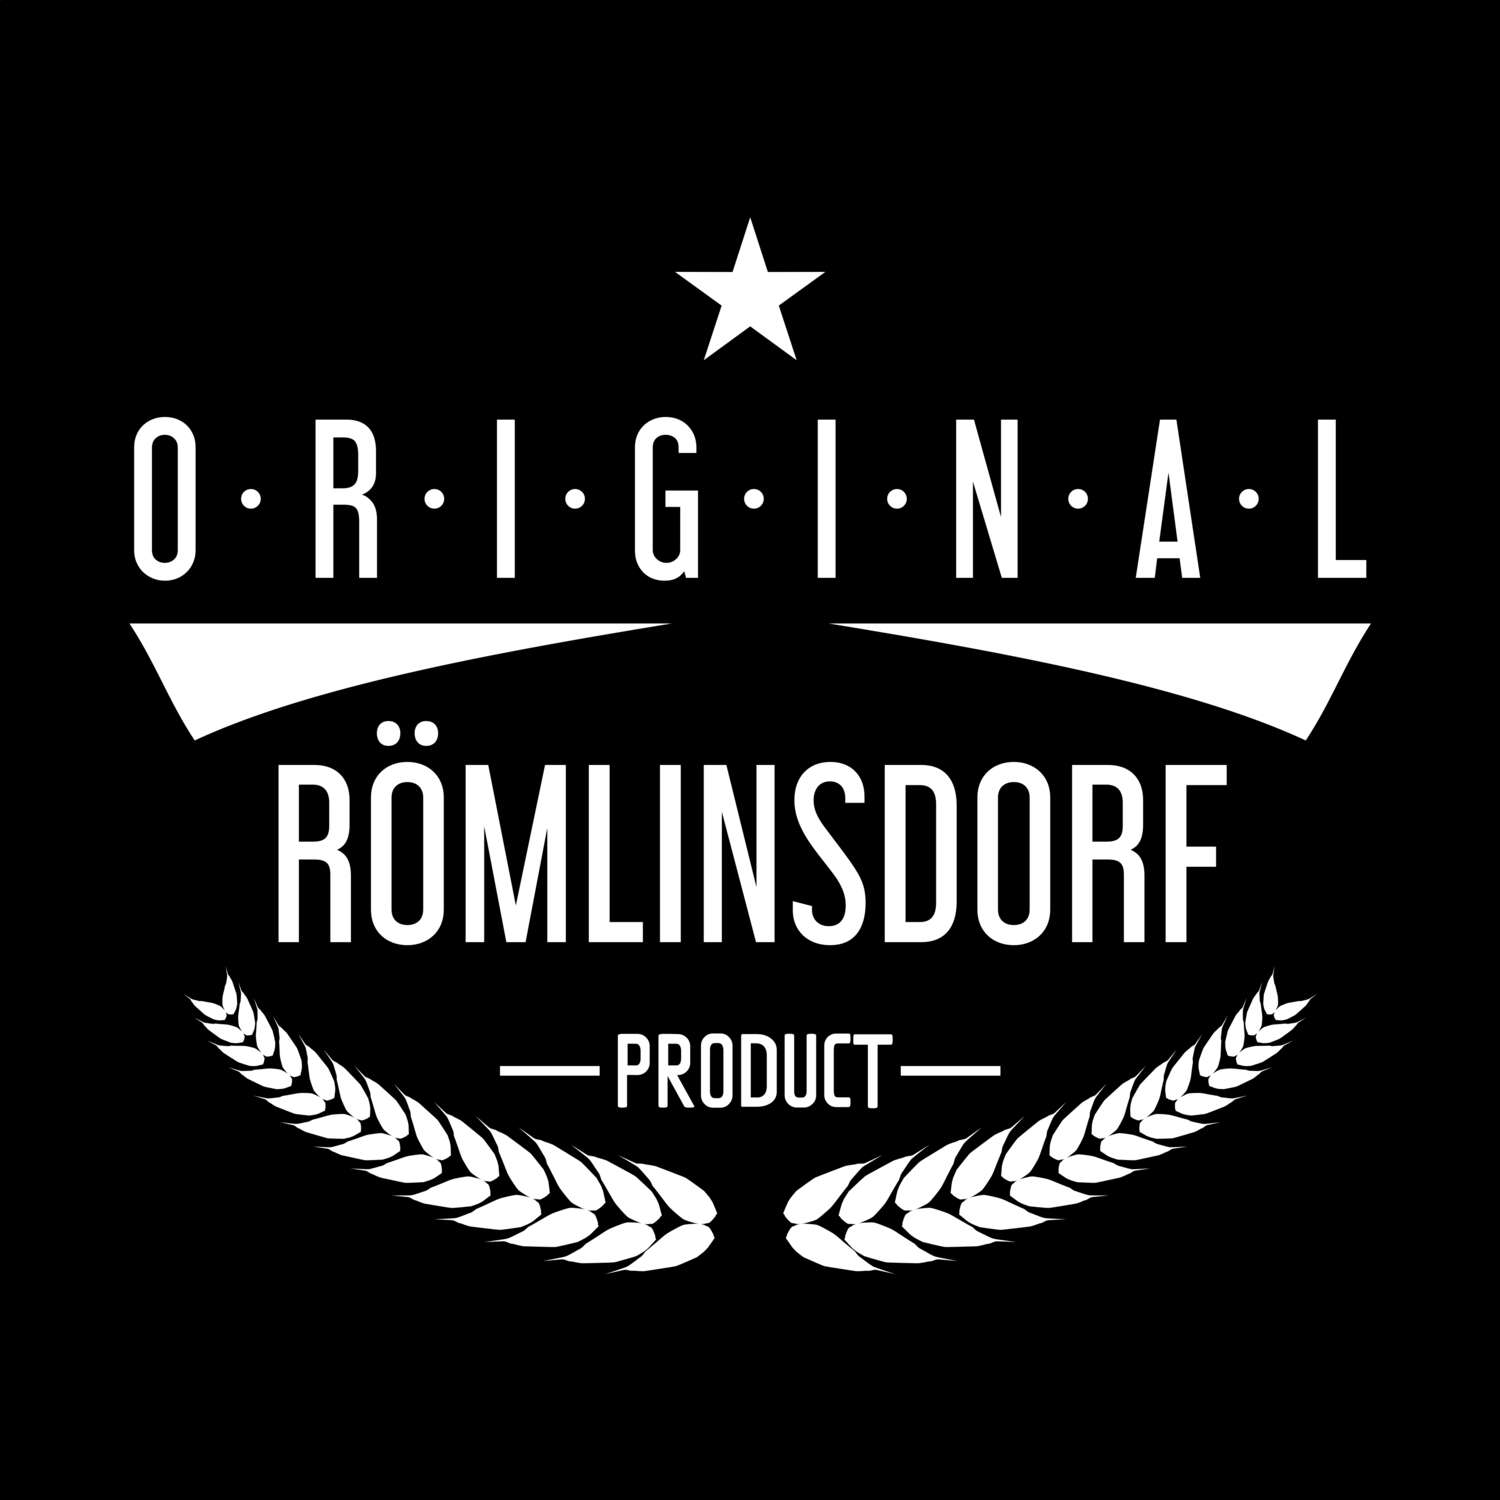 Römlinsdorf T-Shirt »Original Product«